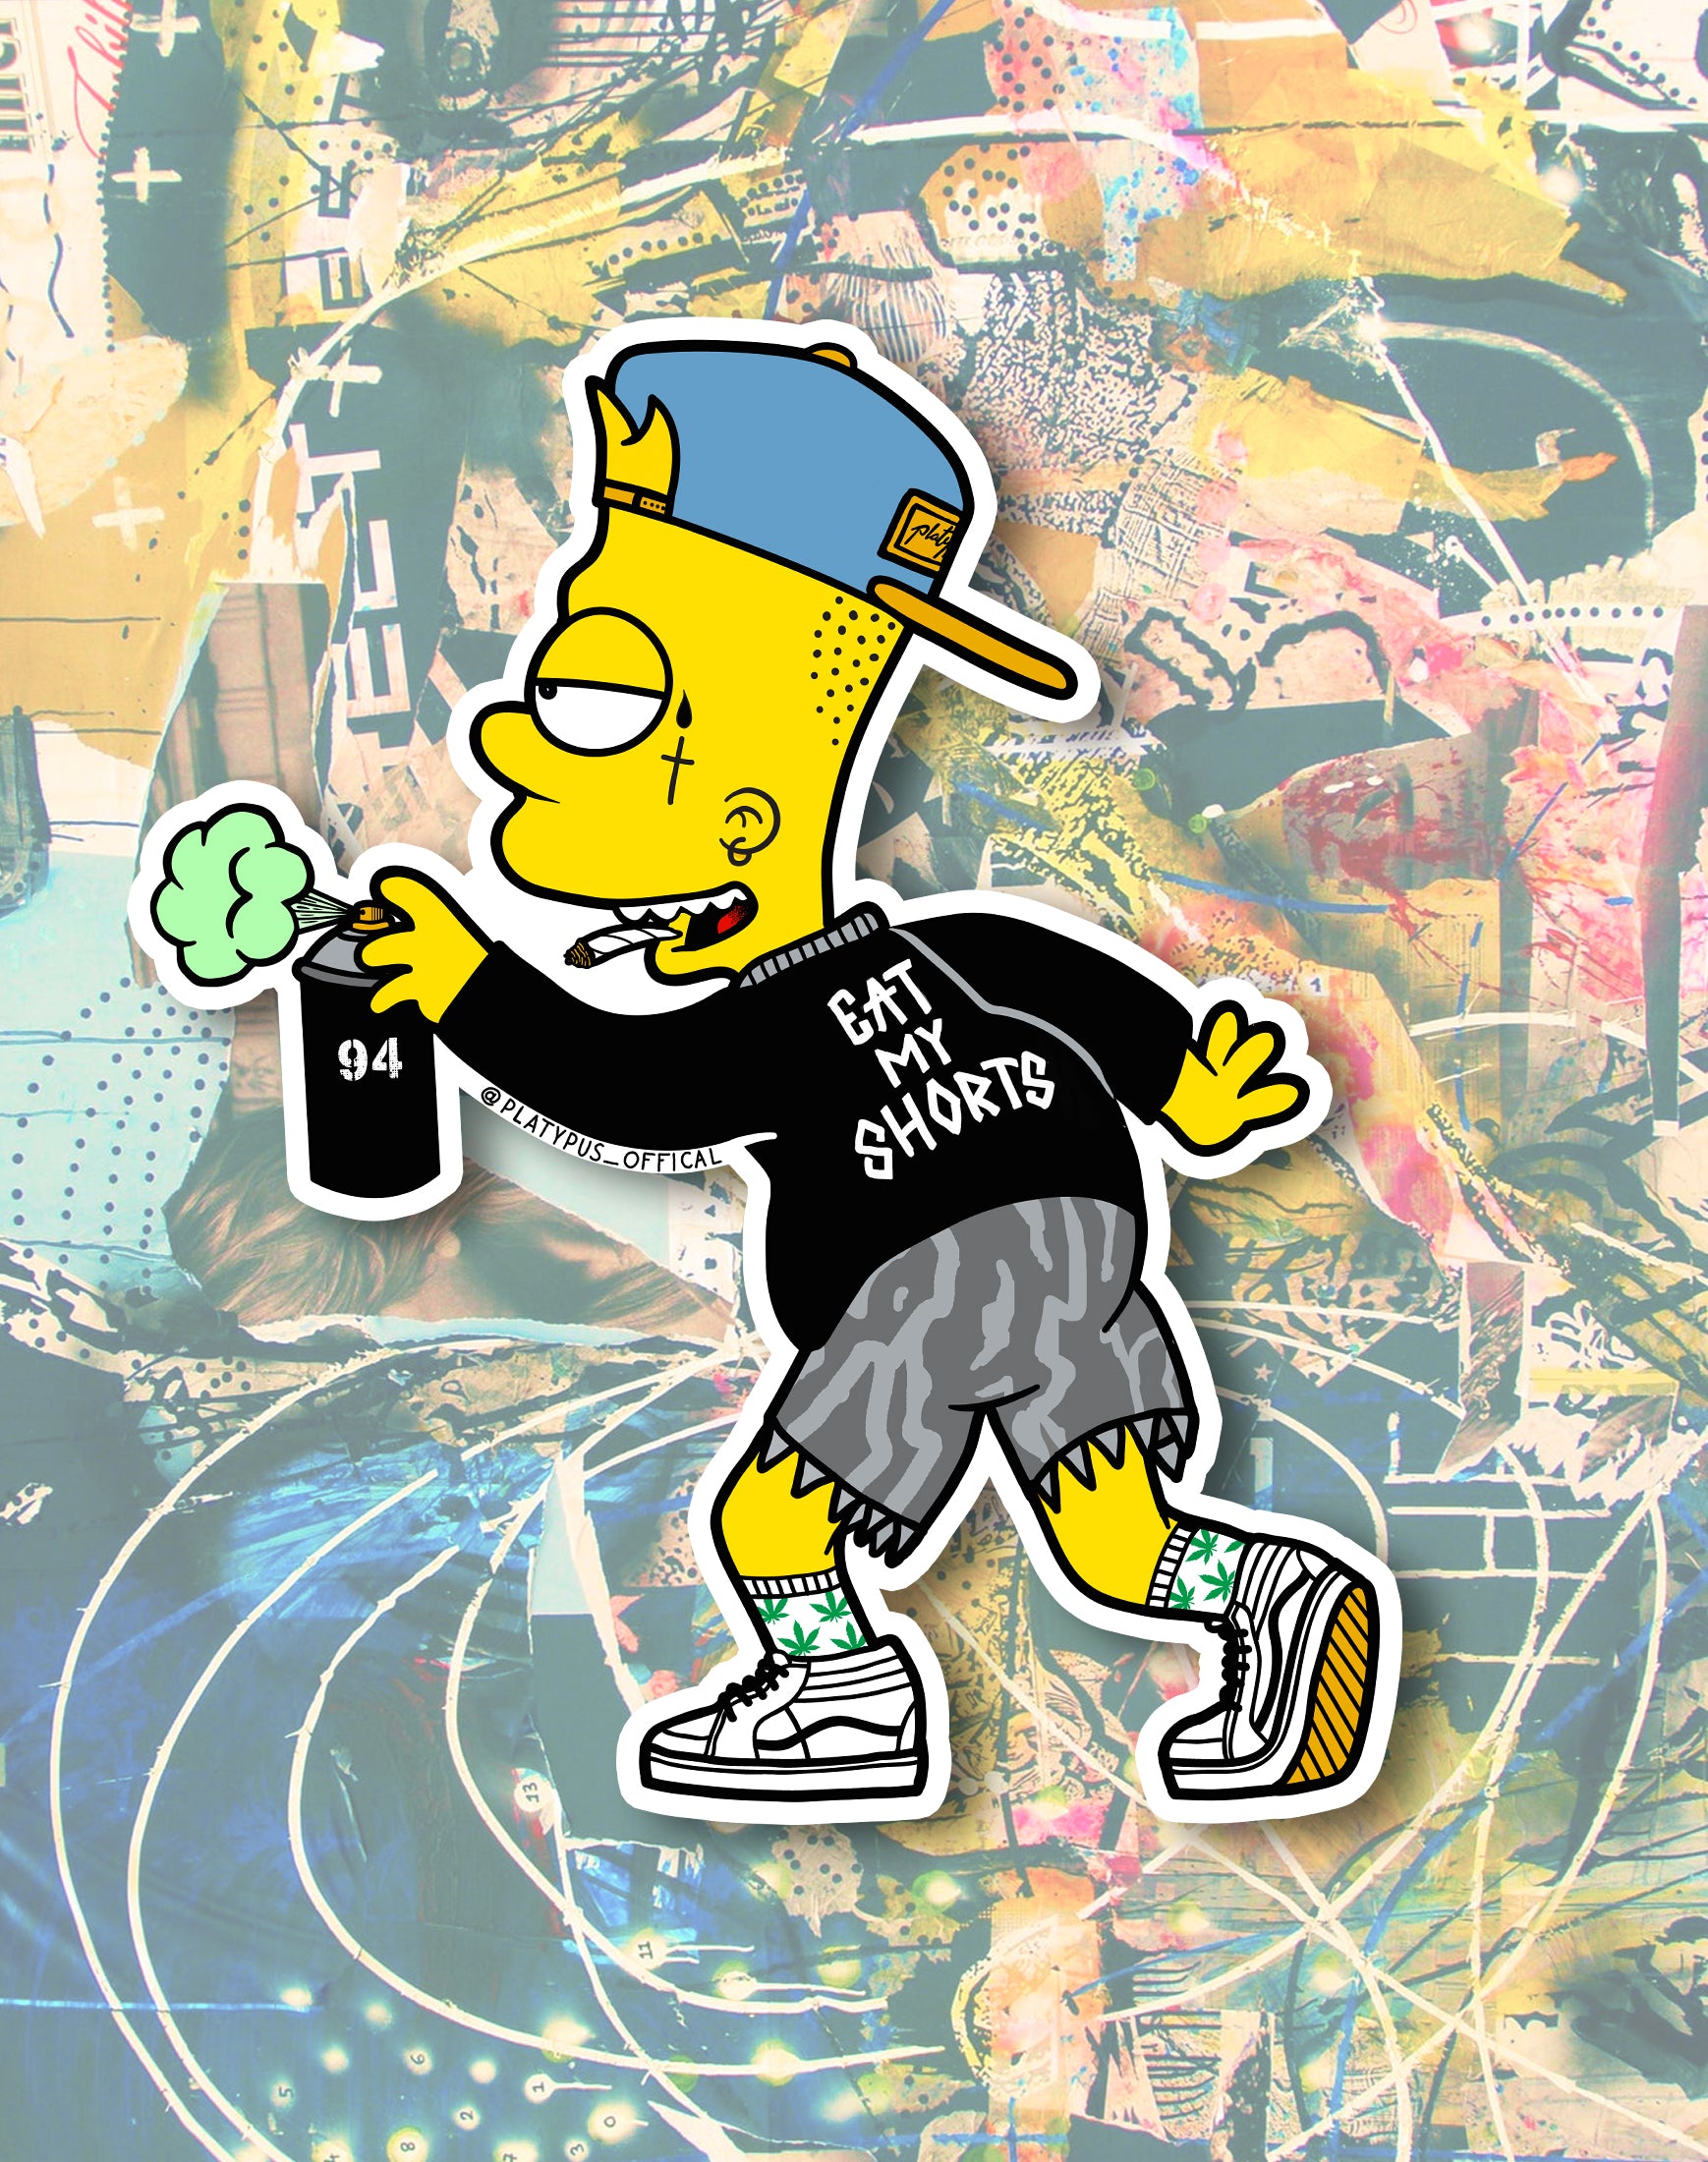 Graffiti Eat my shorts Bart Simpson parody vinyl decal sticker design by Maxine Abbott